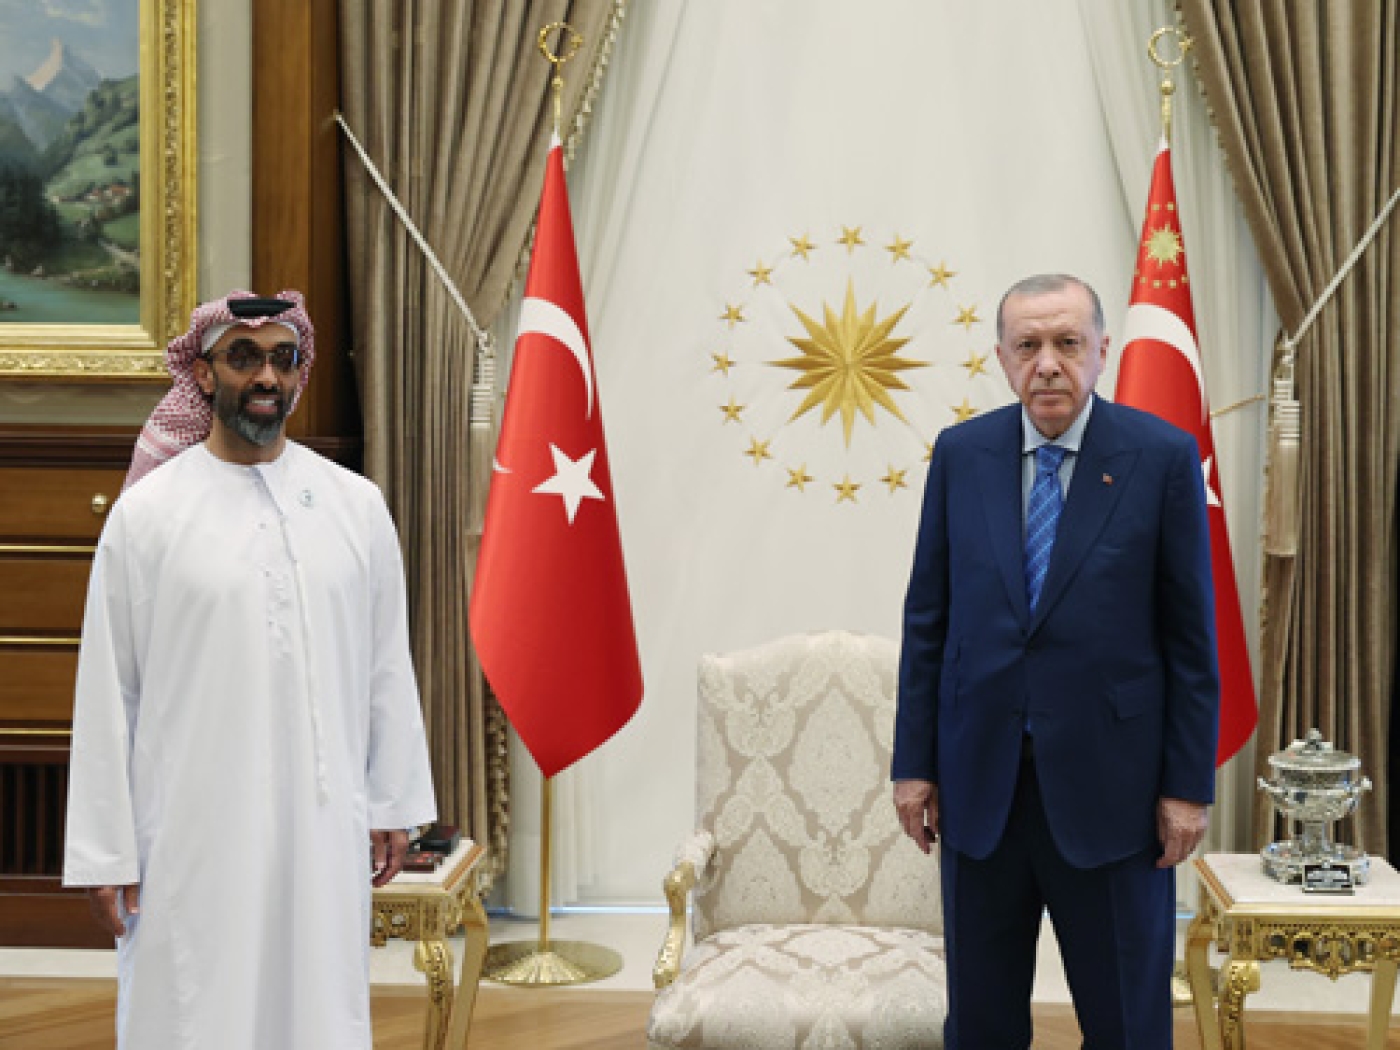 UAE National Security Adviser Sheikh Tahnoun bin Zayed and Turkish President Recep Tayyip Erdogan meet in Ankara on 18 August 2021 (Turkish Presidency)